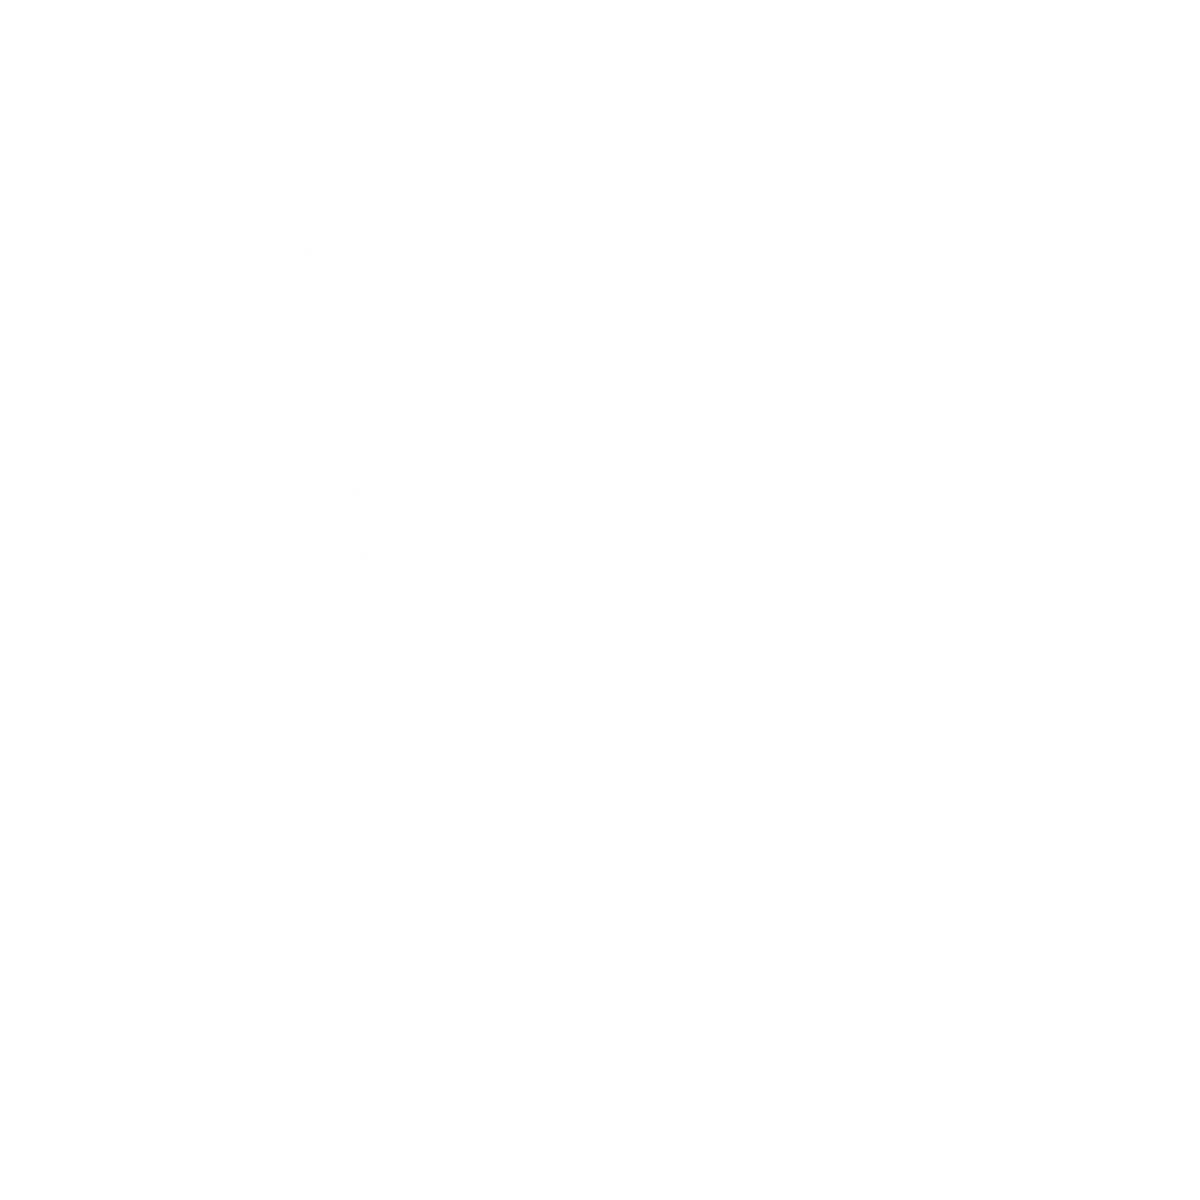 Scismic background logo